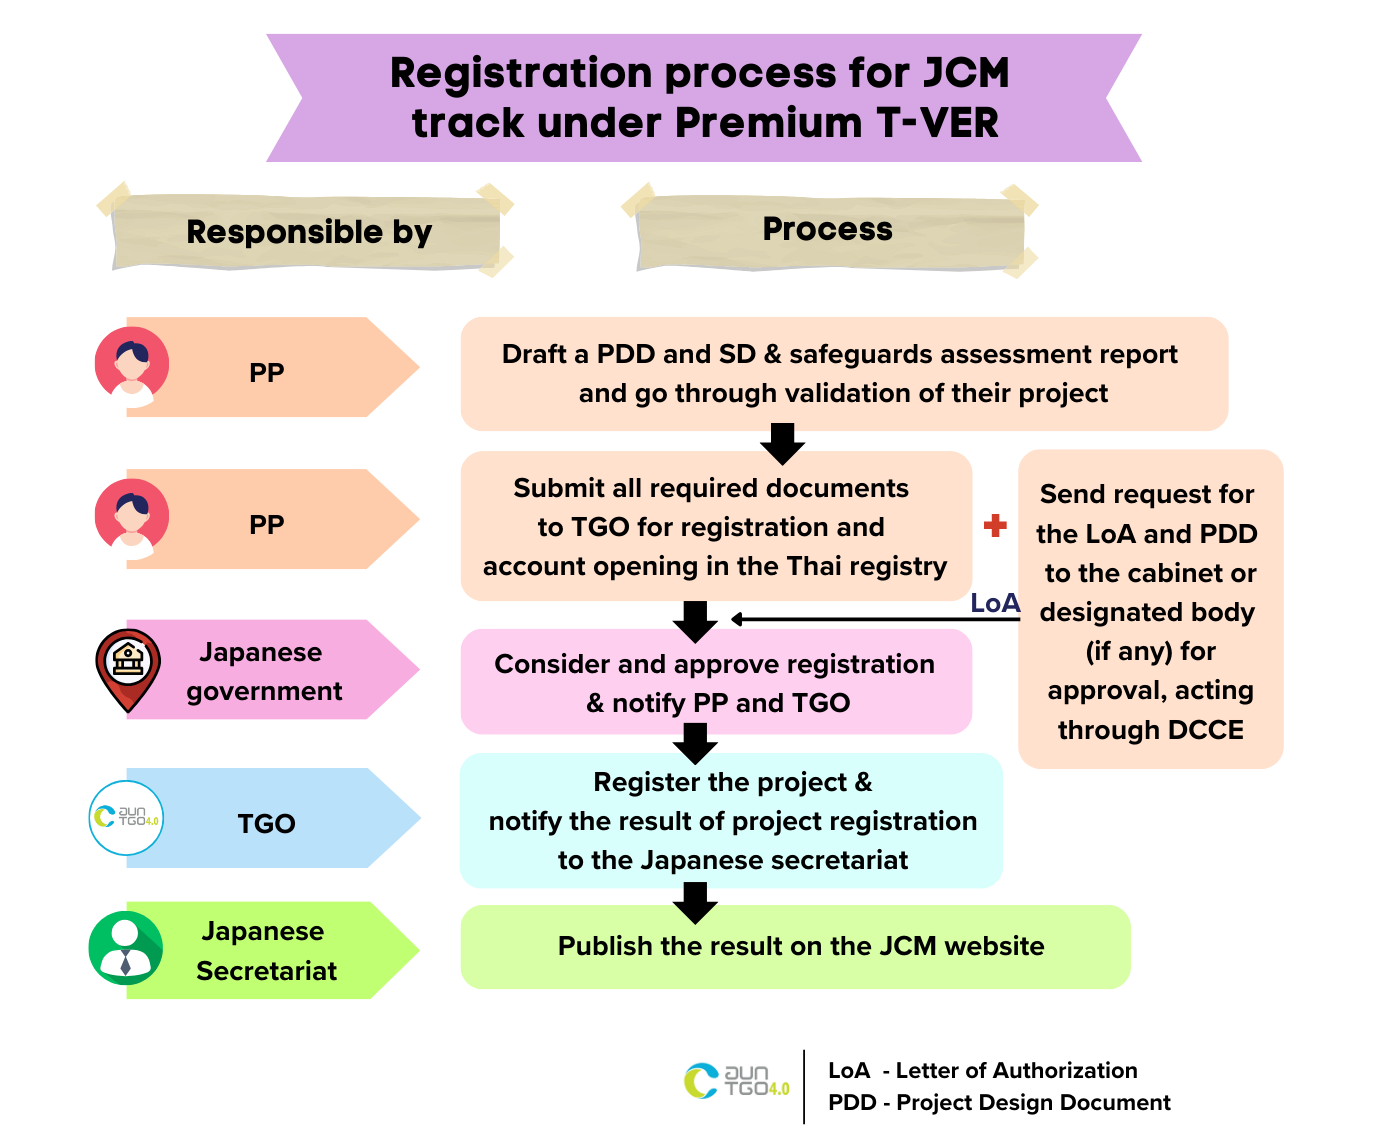 4. Registration process